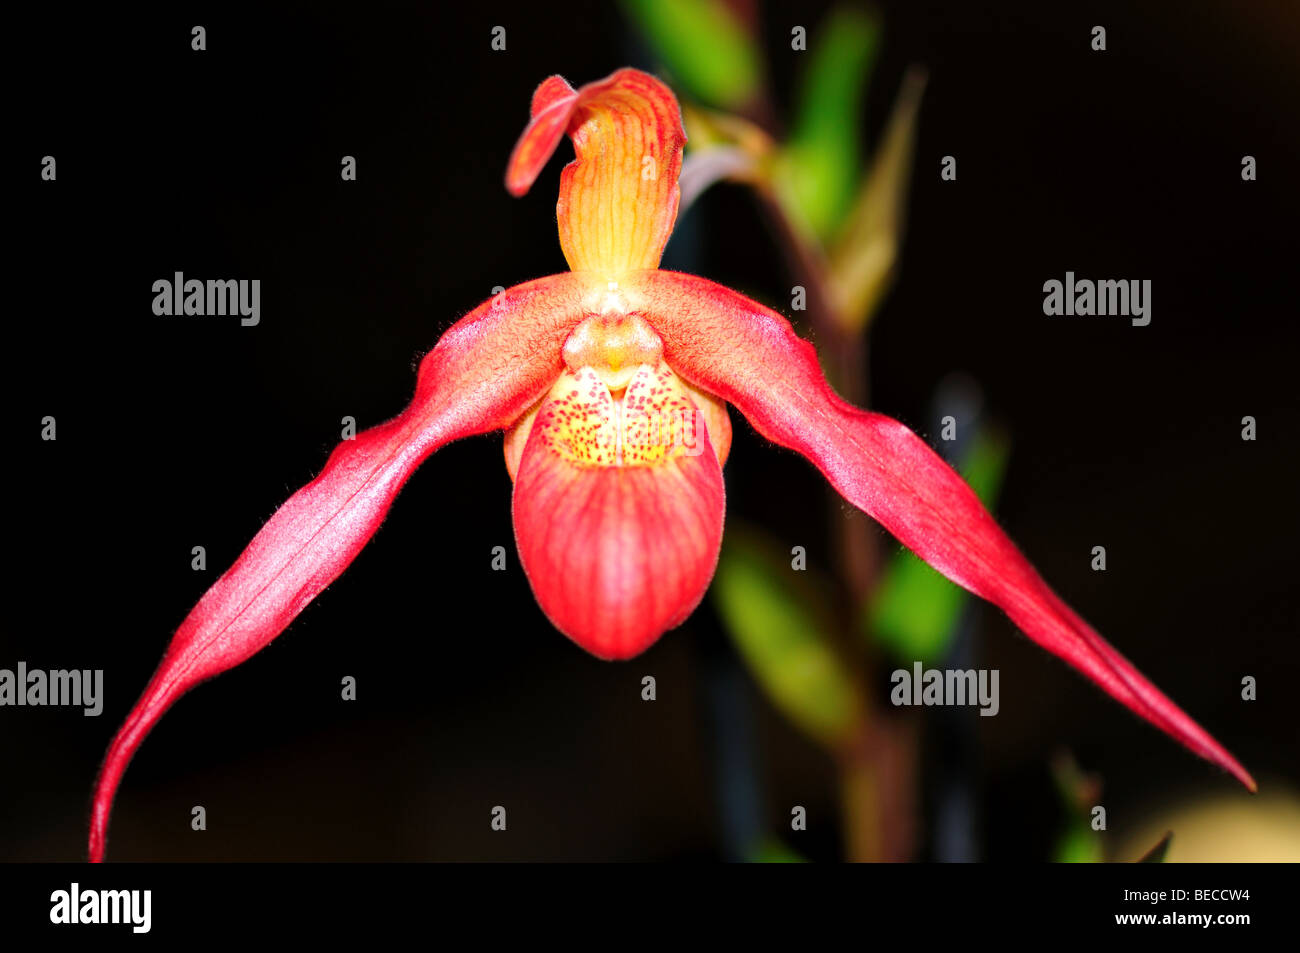 Orchid Flower: Lady's slipper paphiopedilum Stock Photo